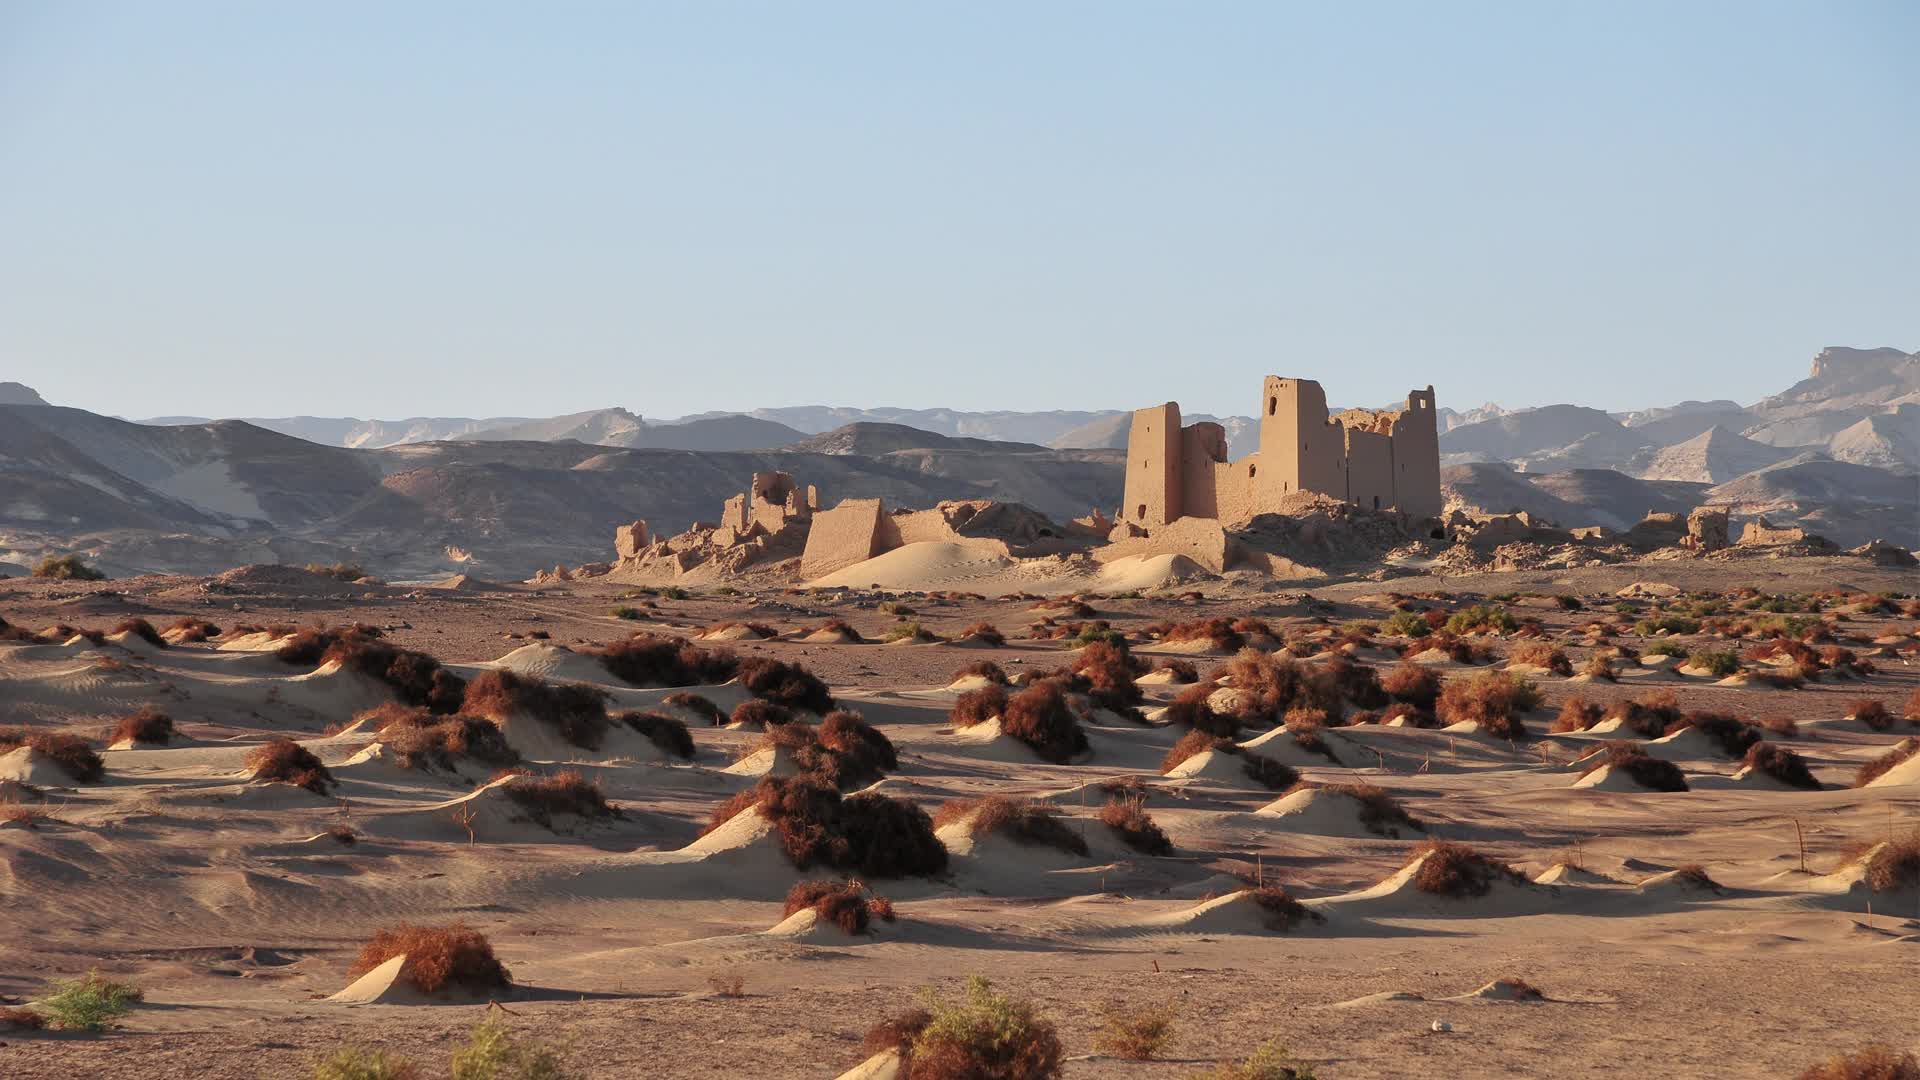  Italian archaeological mission to Umm al-Dabadib - Kharga Oasis, Egypt